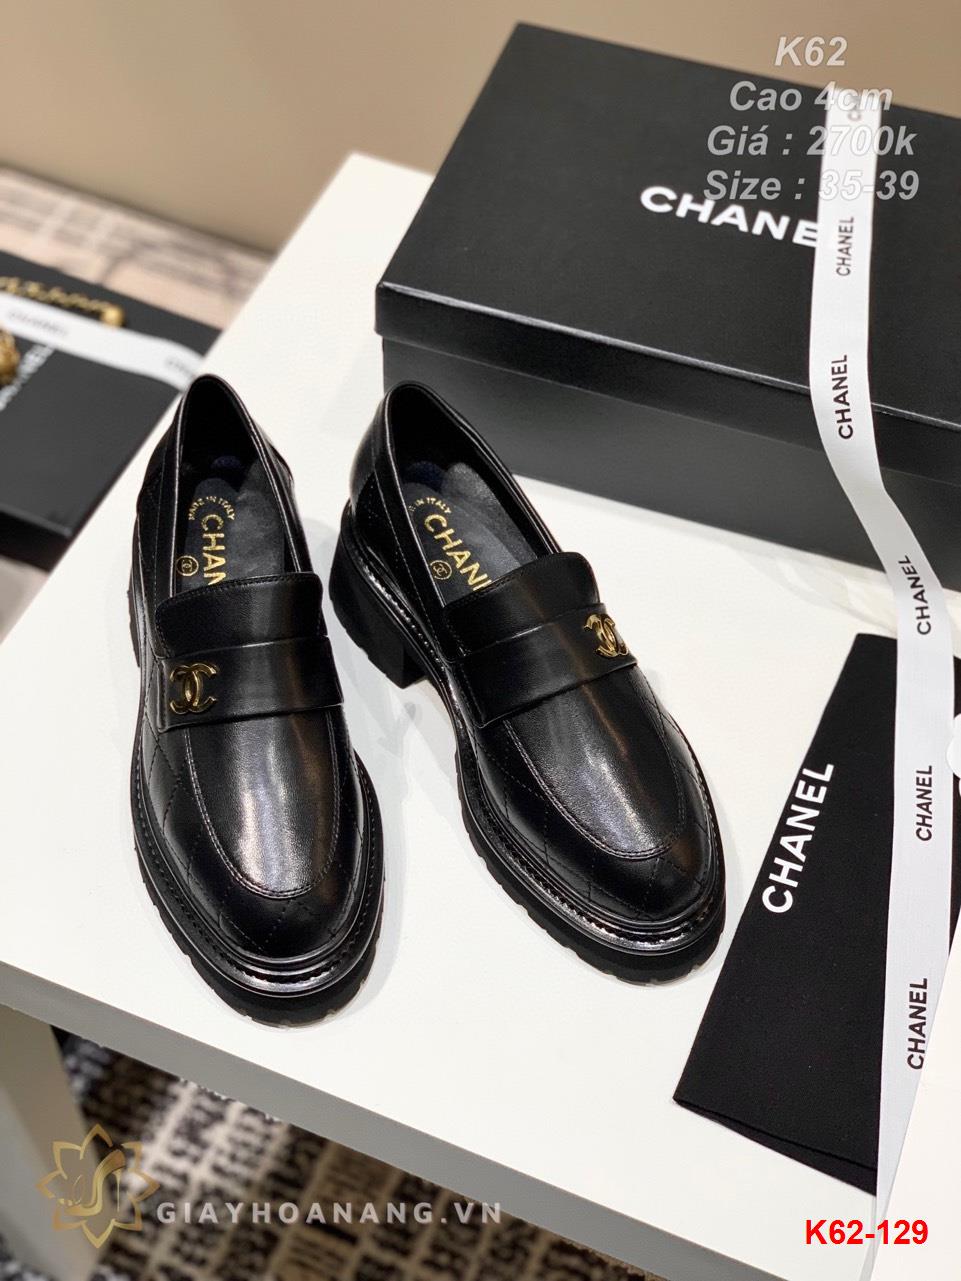 K62-129 Chanel giày cao 4cm siêu cấp